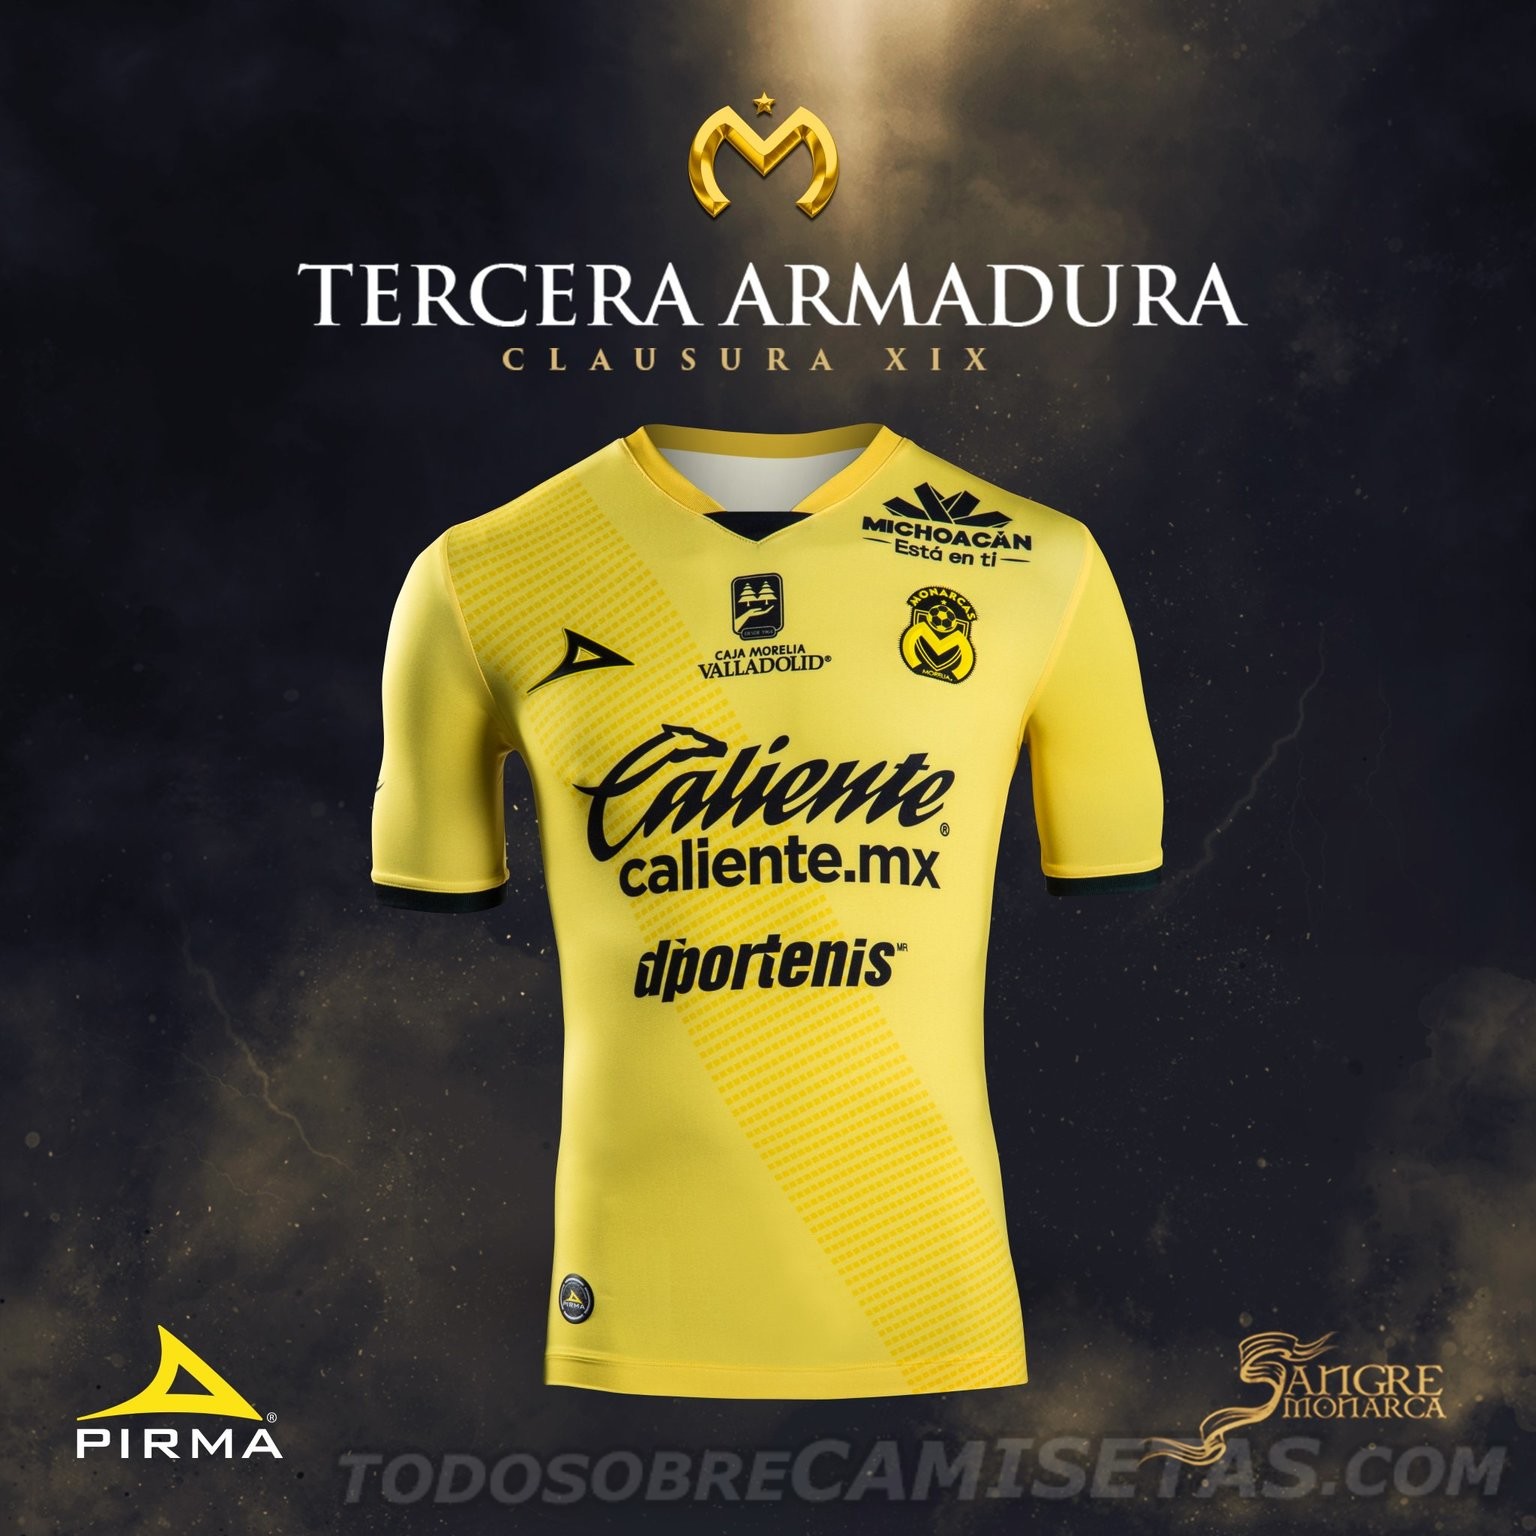 Tercer jersey Pirma de Monarcas Morelia 2019